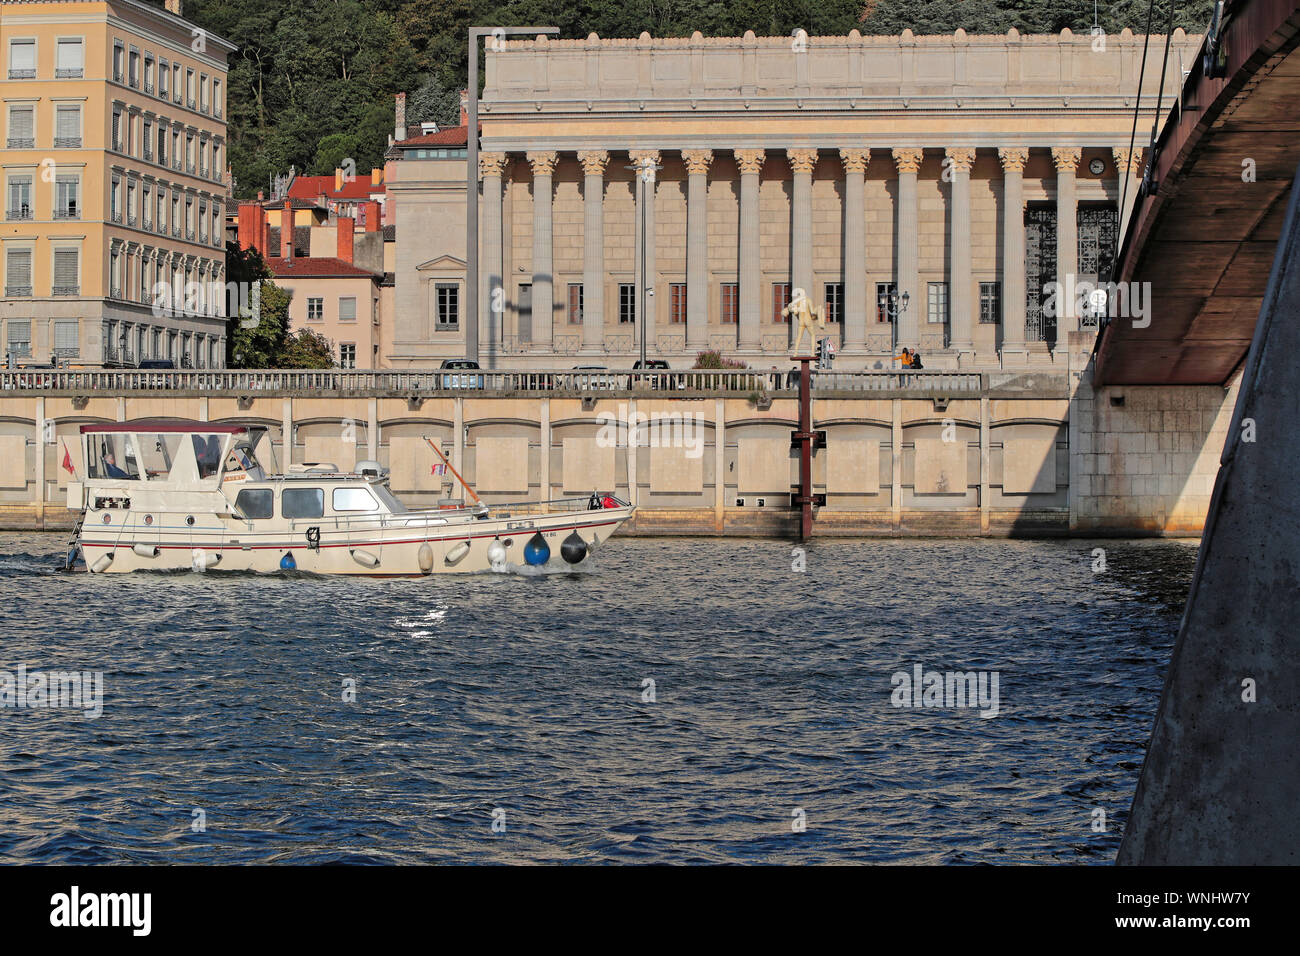 LYON, Frankreich, 6. September 2019: Boot unter dem Palais de justice Historique de Lyon (historisches Gericht Gesetz), am rechten Ufer der Saône, ist c Stockfoto